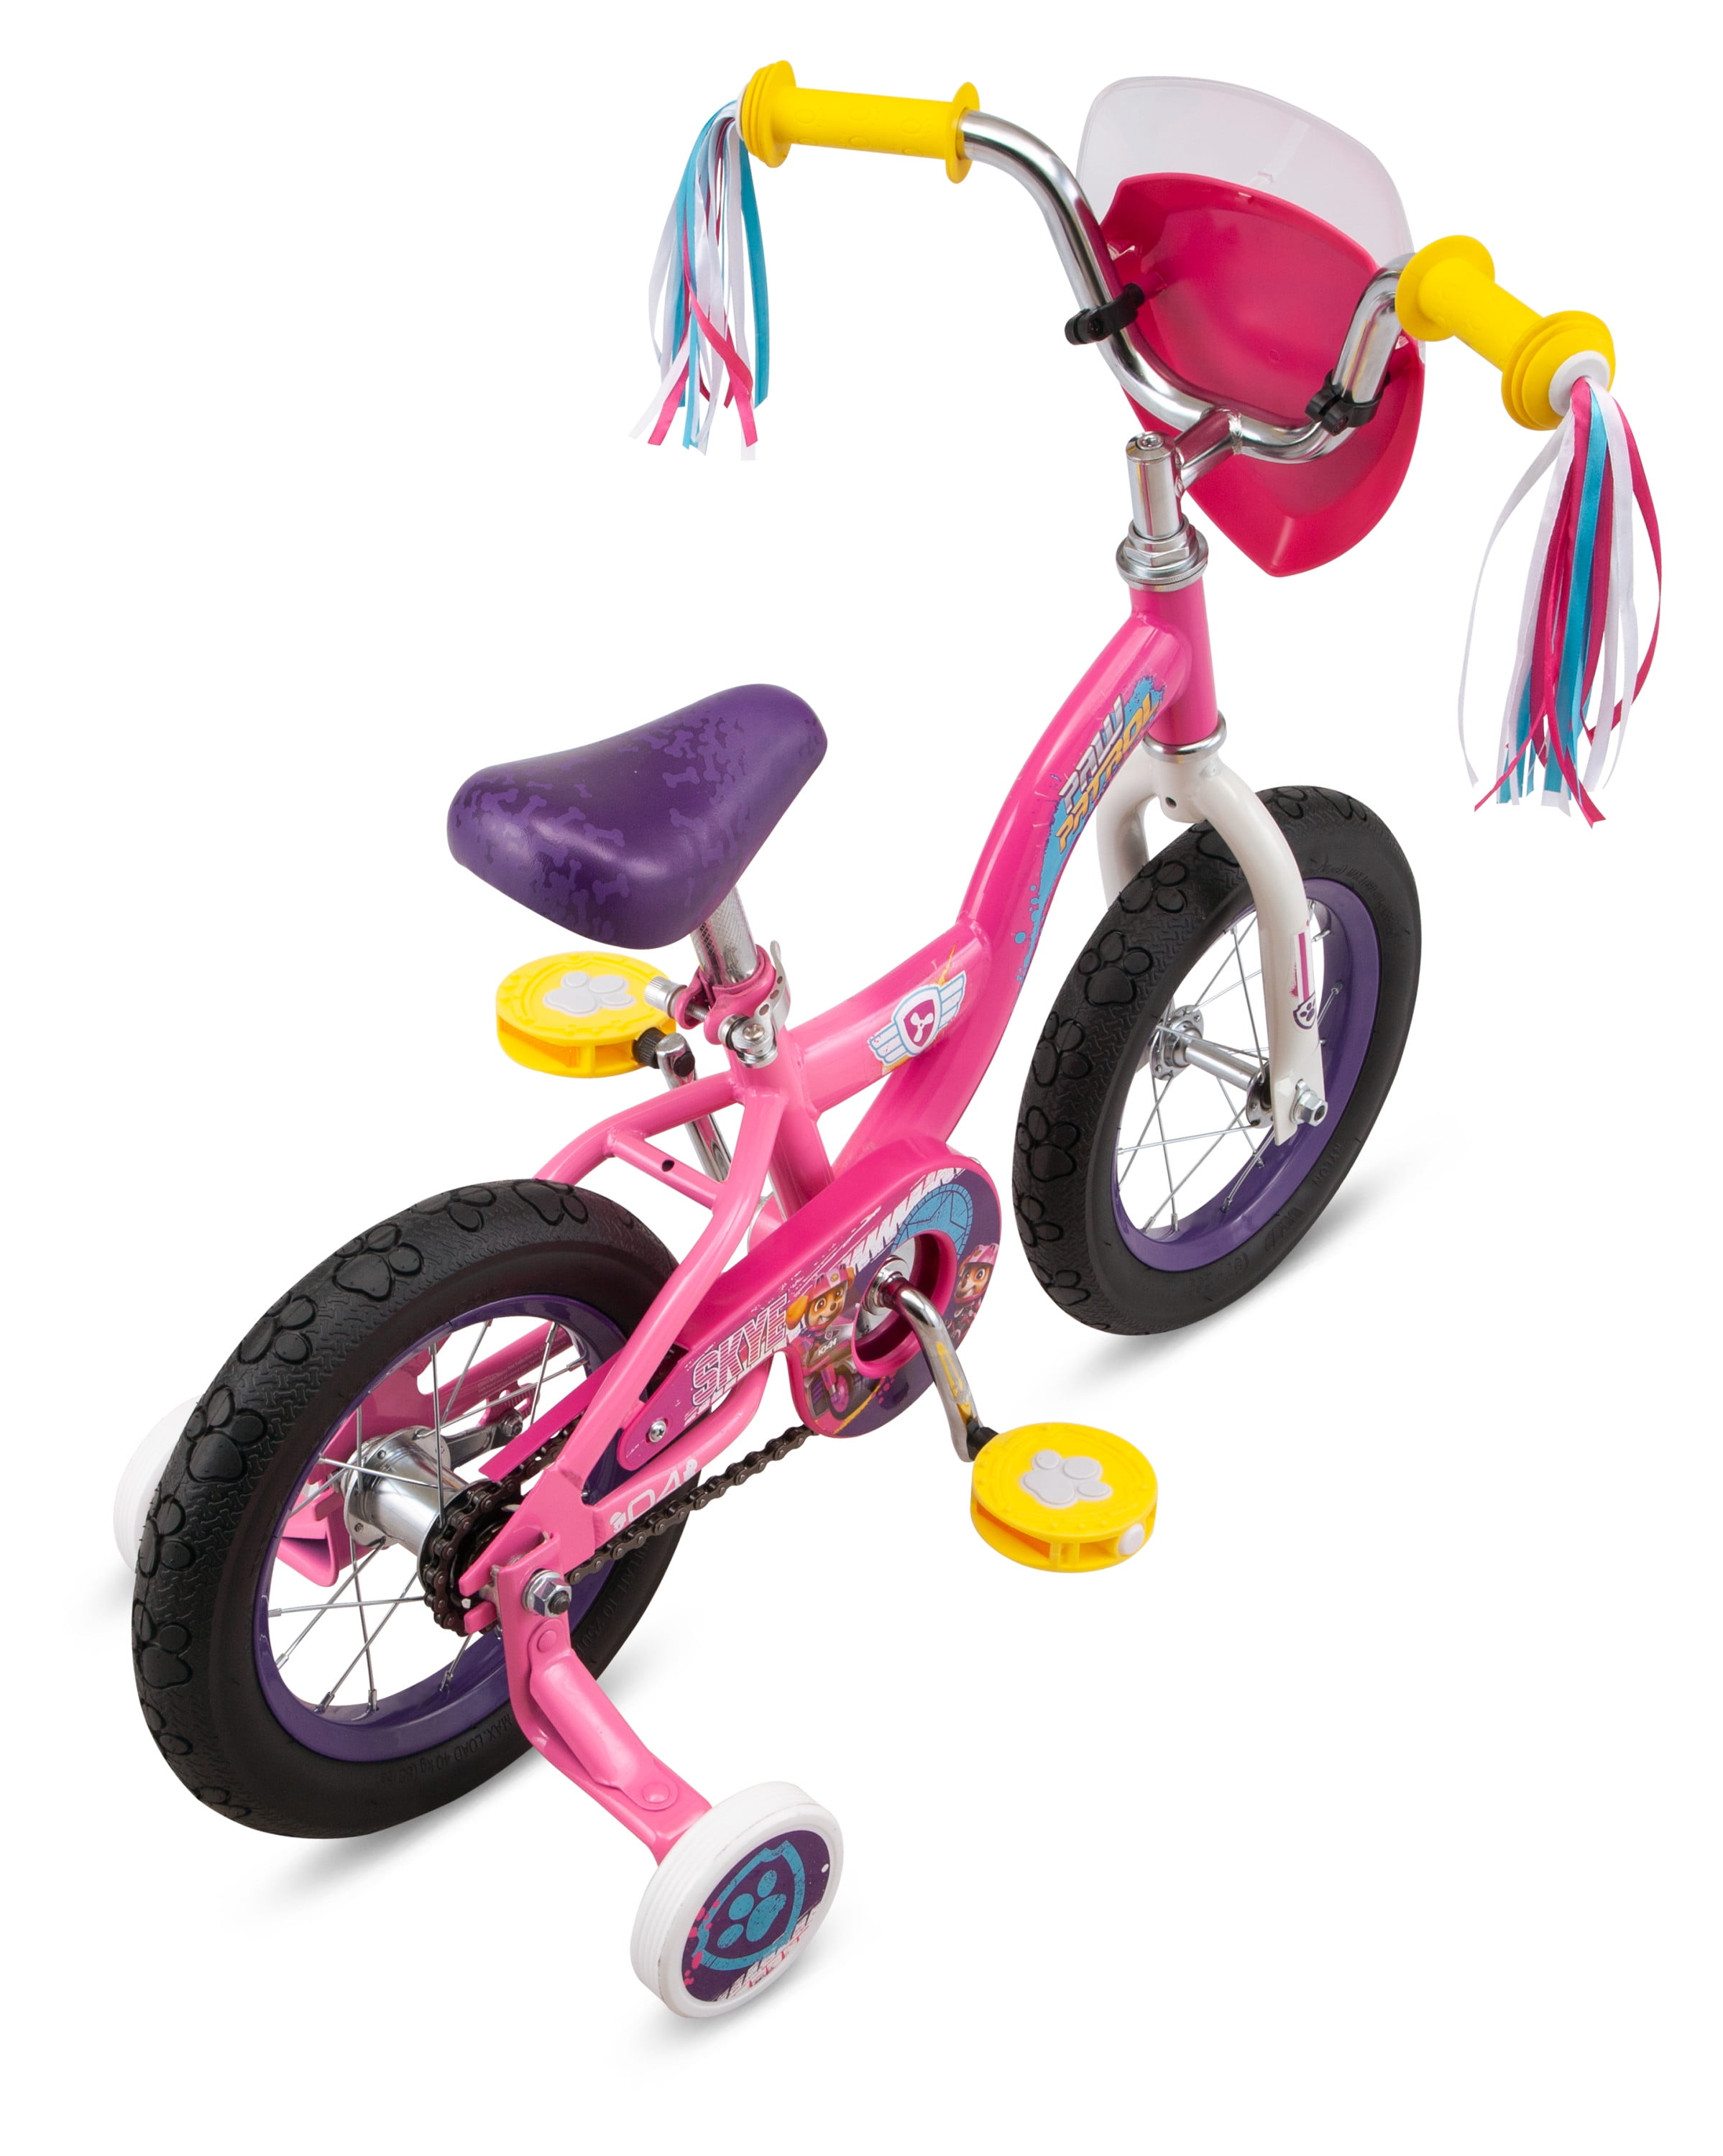 Nickelodeon Paw Patrol Skye Kids Bike for Girls, 12 inch Wheels, Ages 2-4, Magenta Pink